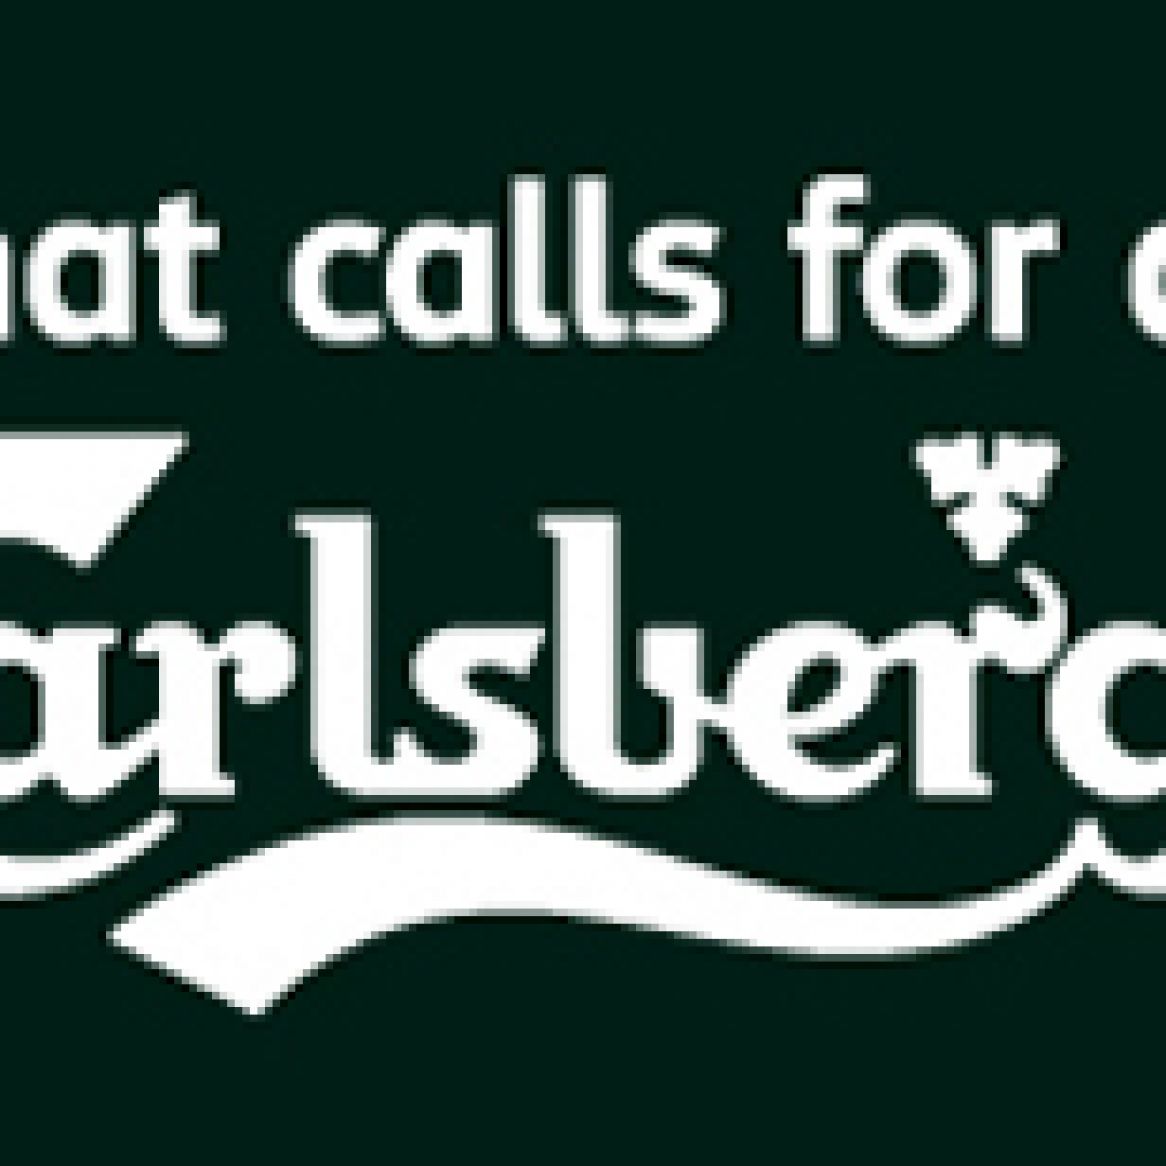 Carlsberg extends 'unique' sponsorship